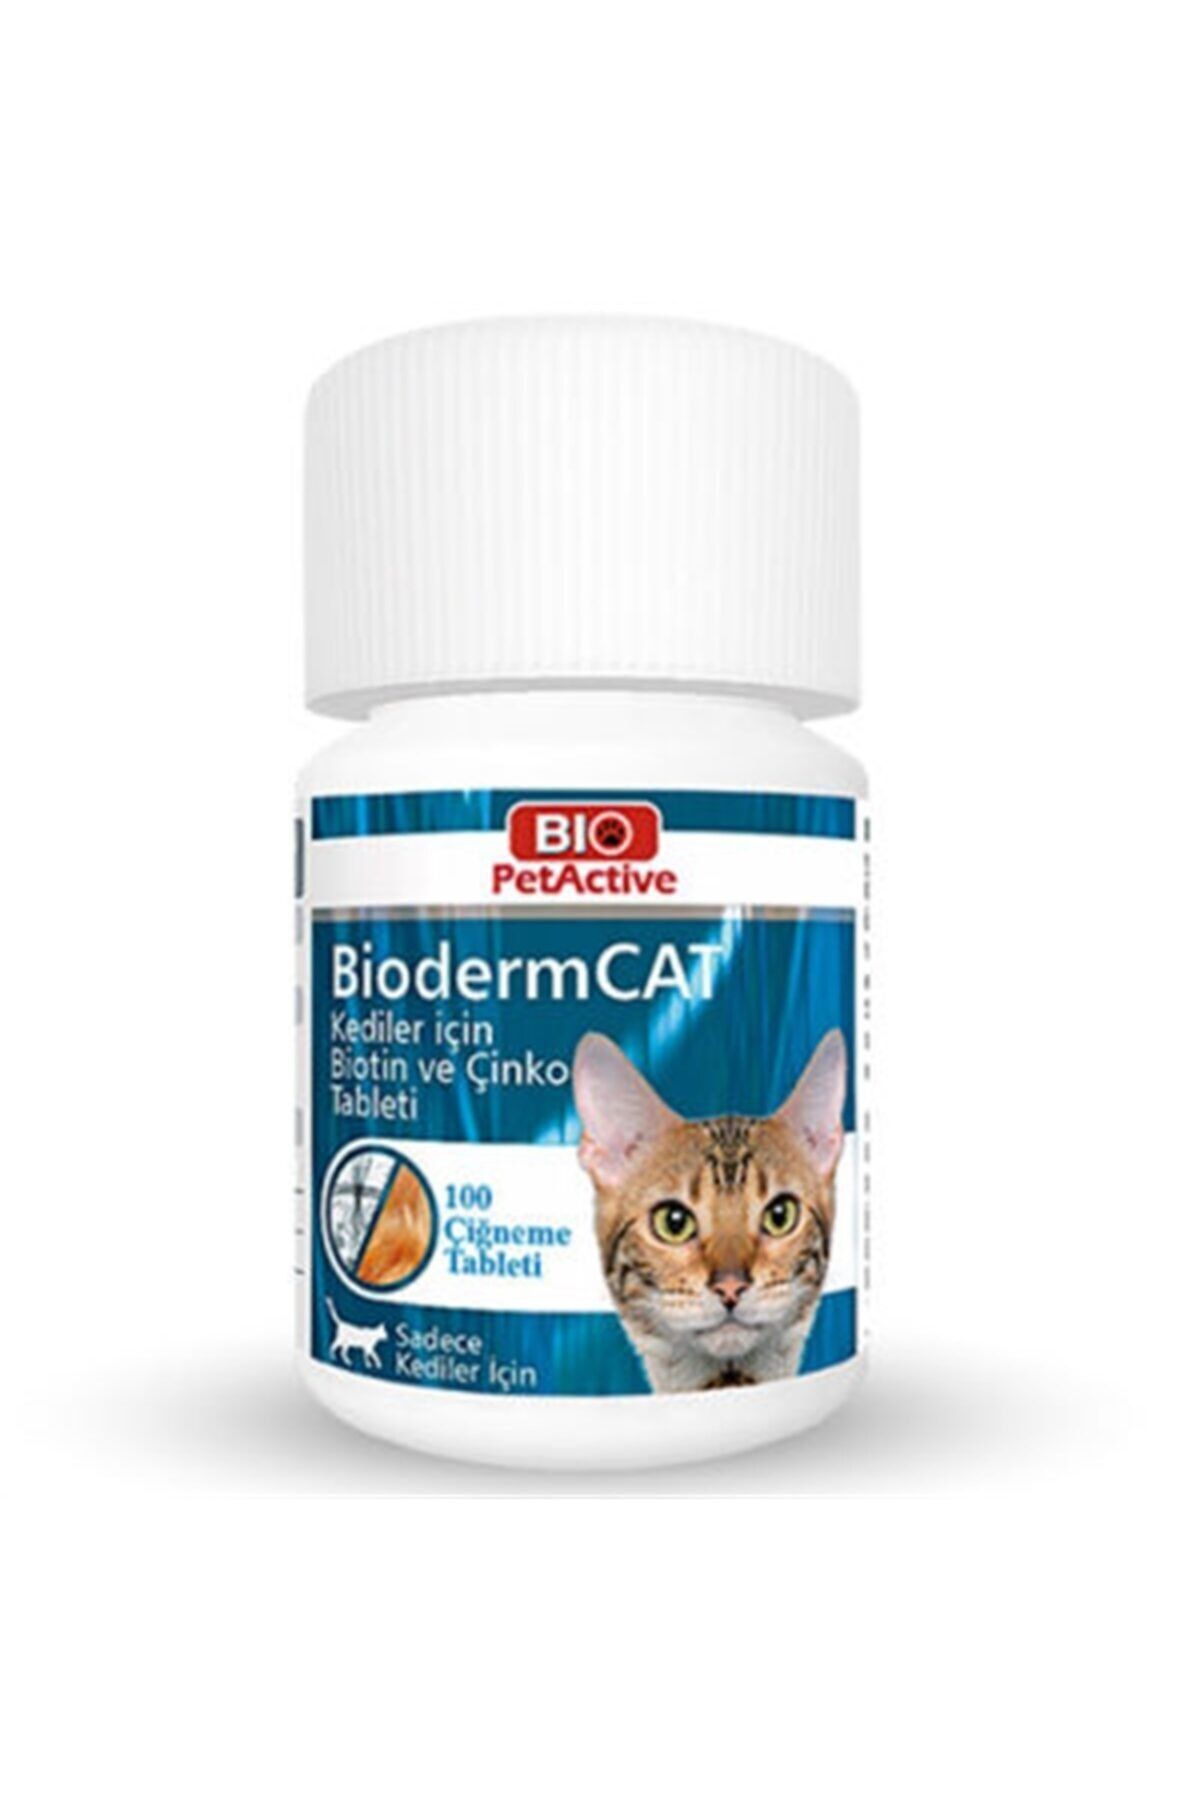 Bio PetActive Bioderm Cat 100 Tb 30 gr